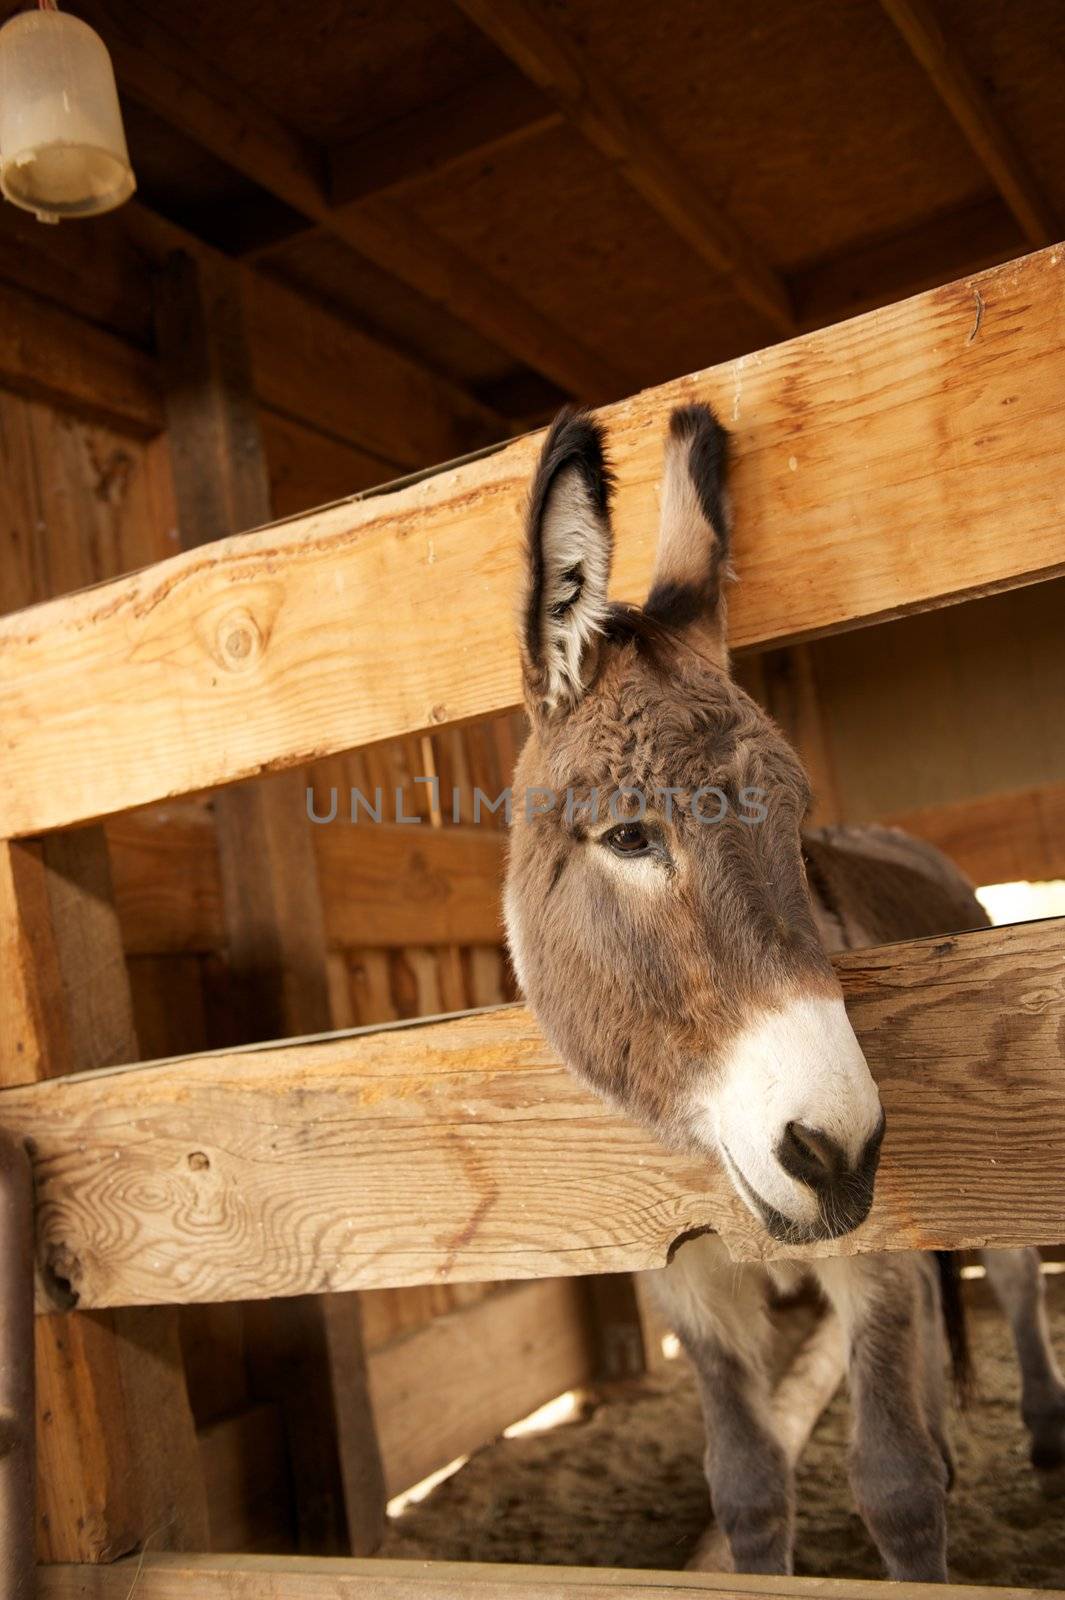 Gray Donkey in a wooden pen by pixelsnap